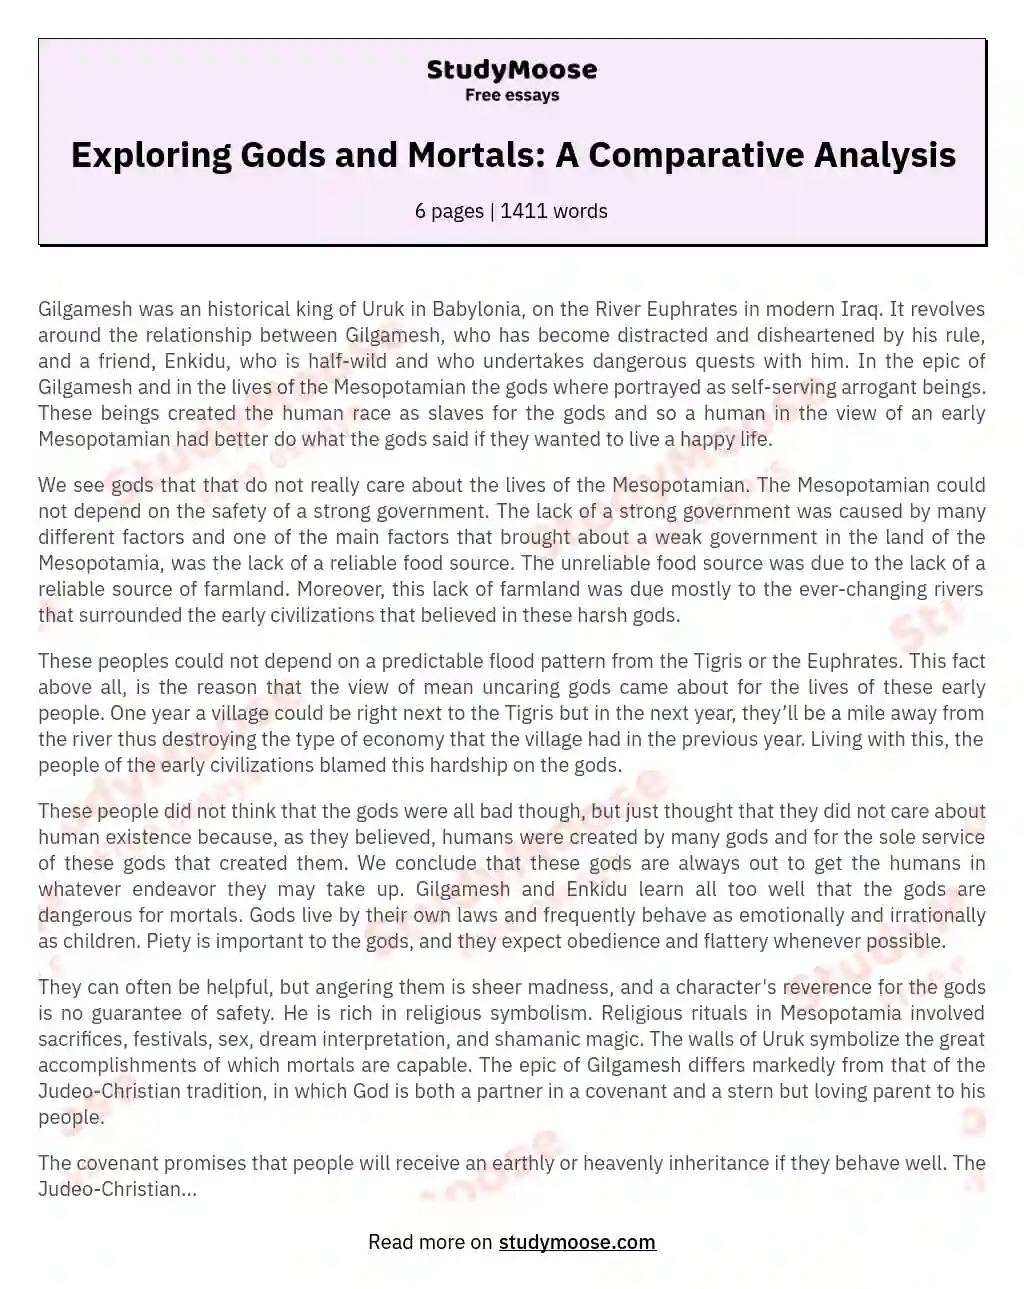 Exploring Gods and Mortals: A Comparative Analysis essay